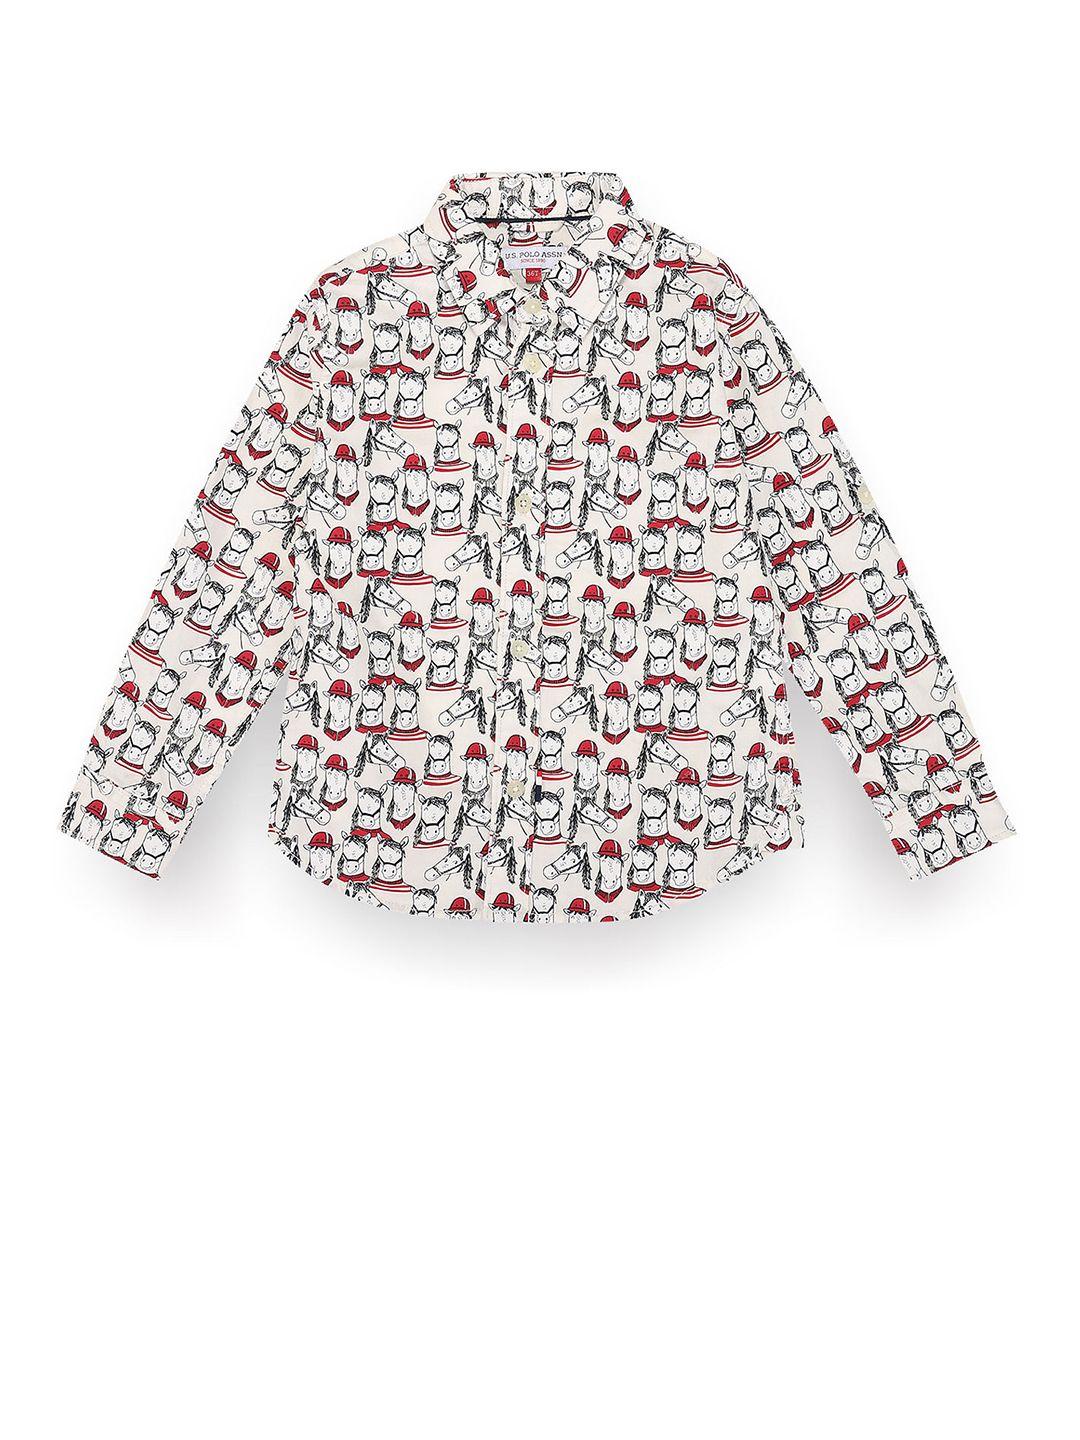 u.s. polo assn. kids boys classic conversational printed pure cotton twill casual shirt